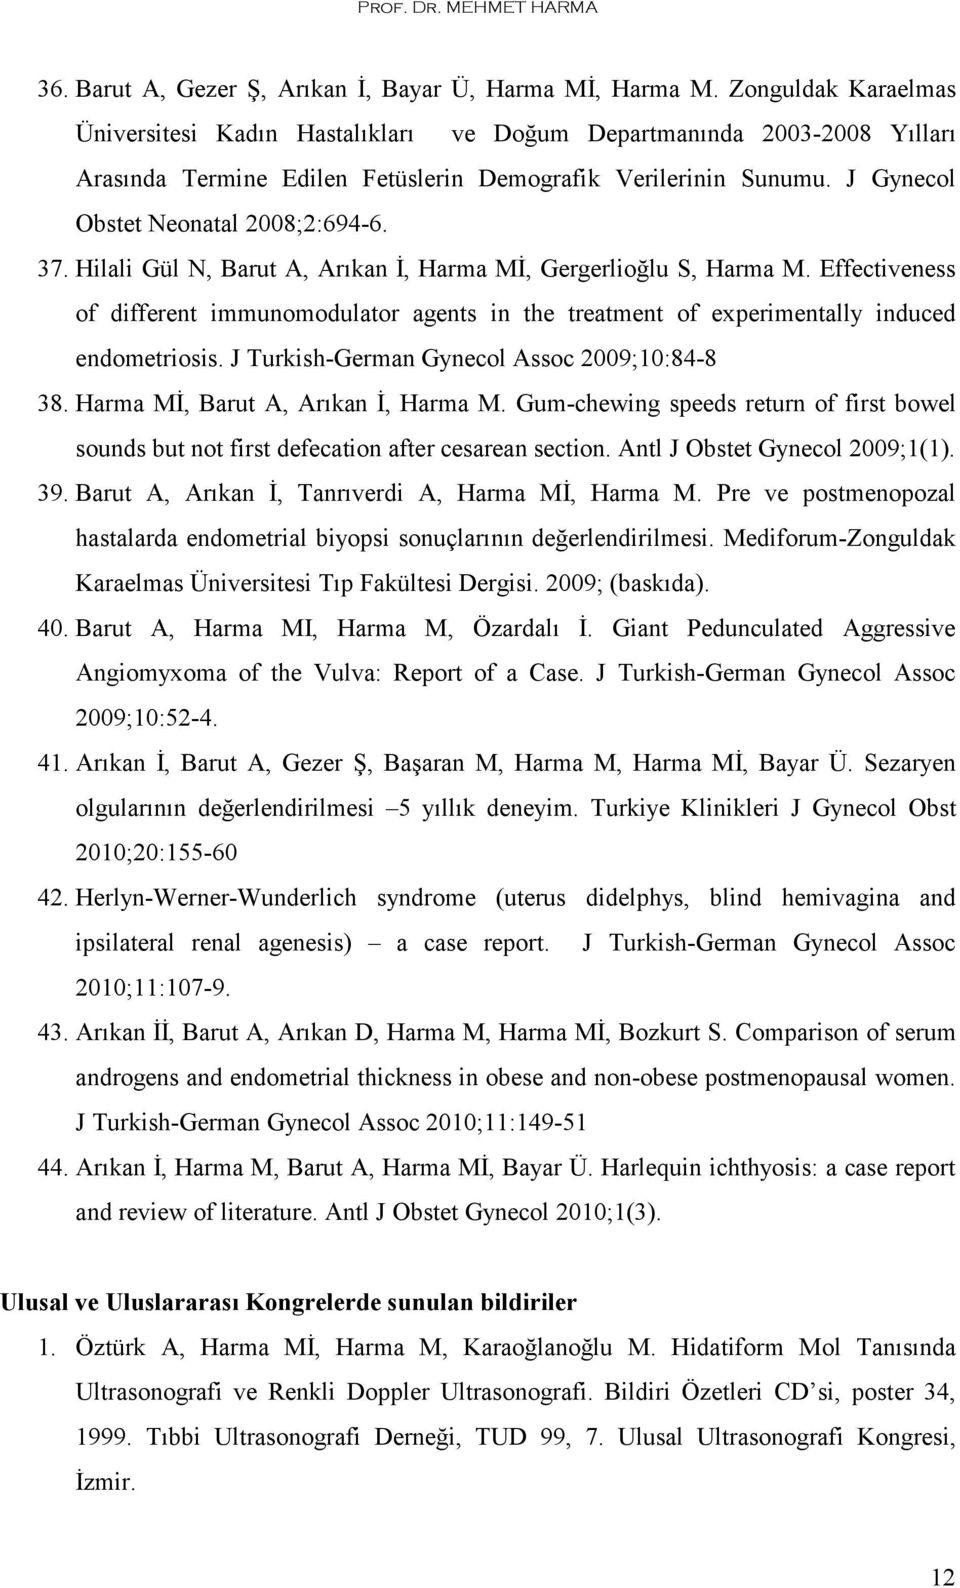 37. Hilali Gül N, Barut A, Arıkan İ, Harma Mİ, Gergerlioğlu S, Harma M. Effectiveness of different immunomodulator agents in the treatment of experimentally induced endometriosis.